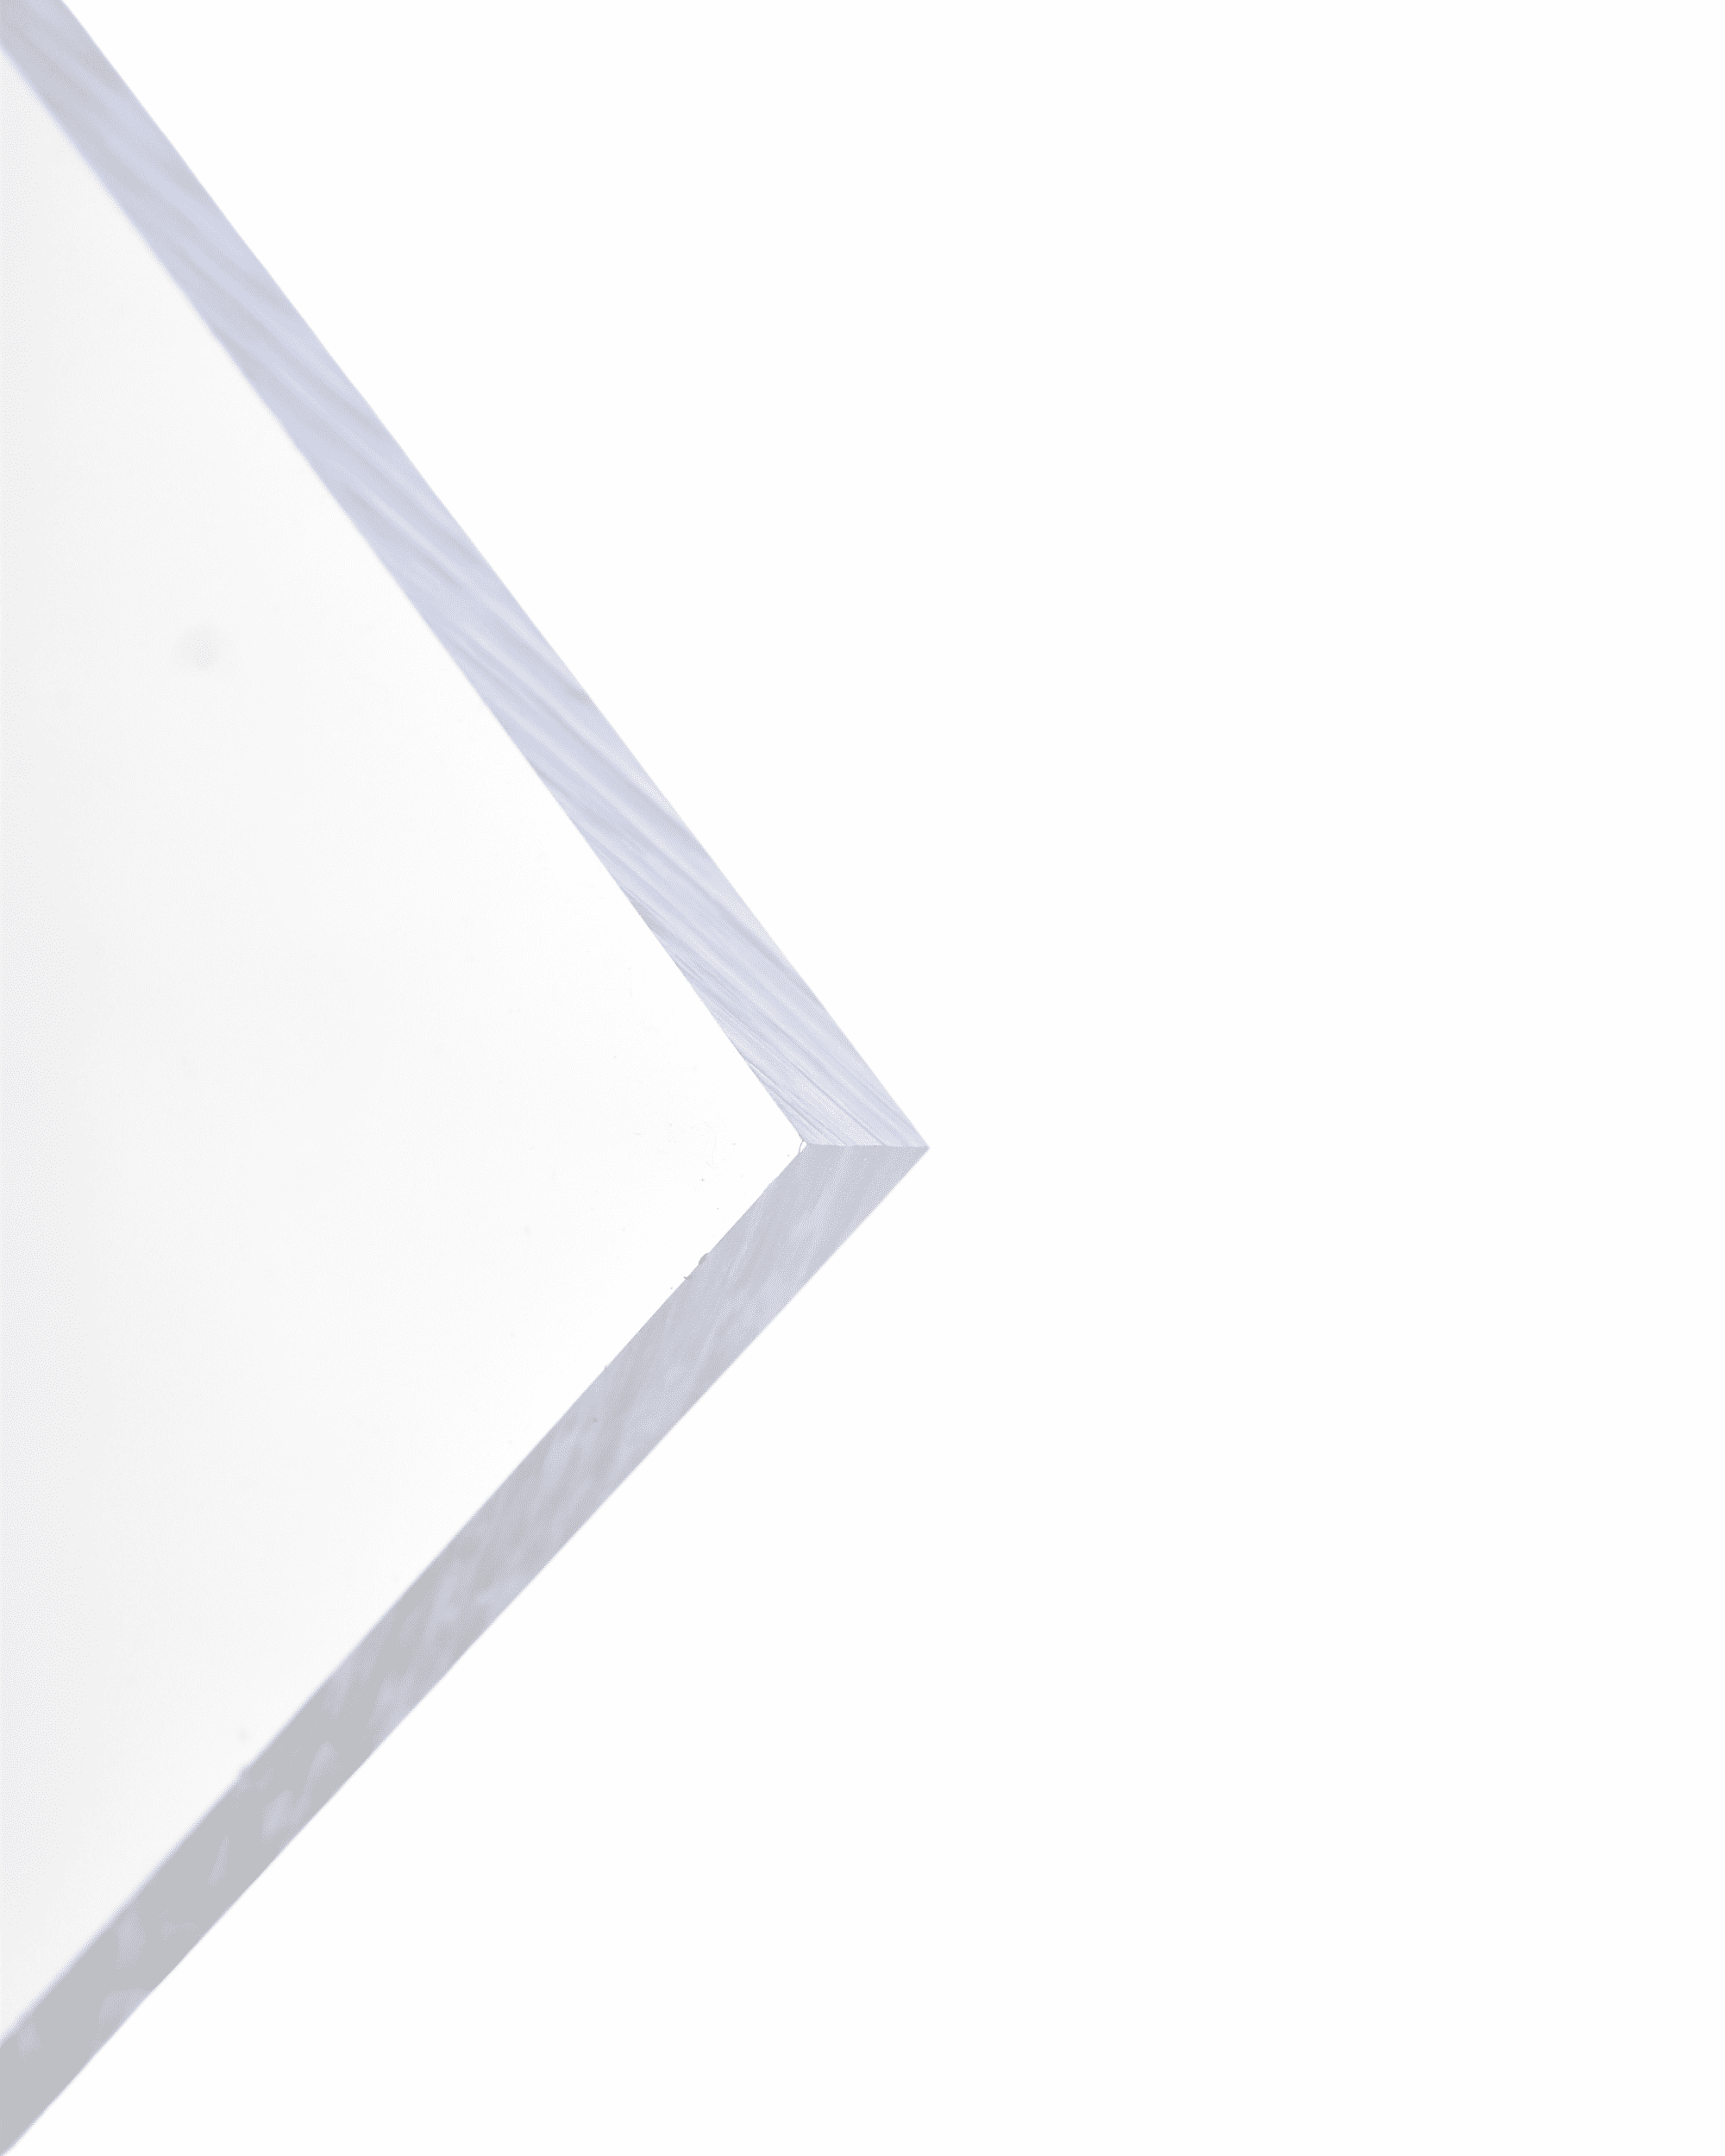 Acrylic Sheet 3/16" Clear Plexiglass 72" x 23" 